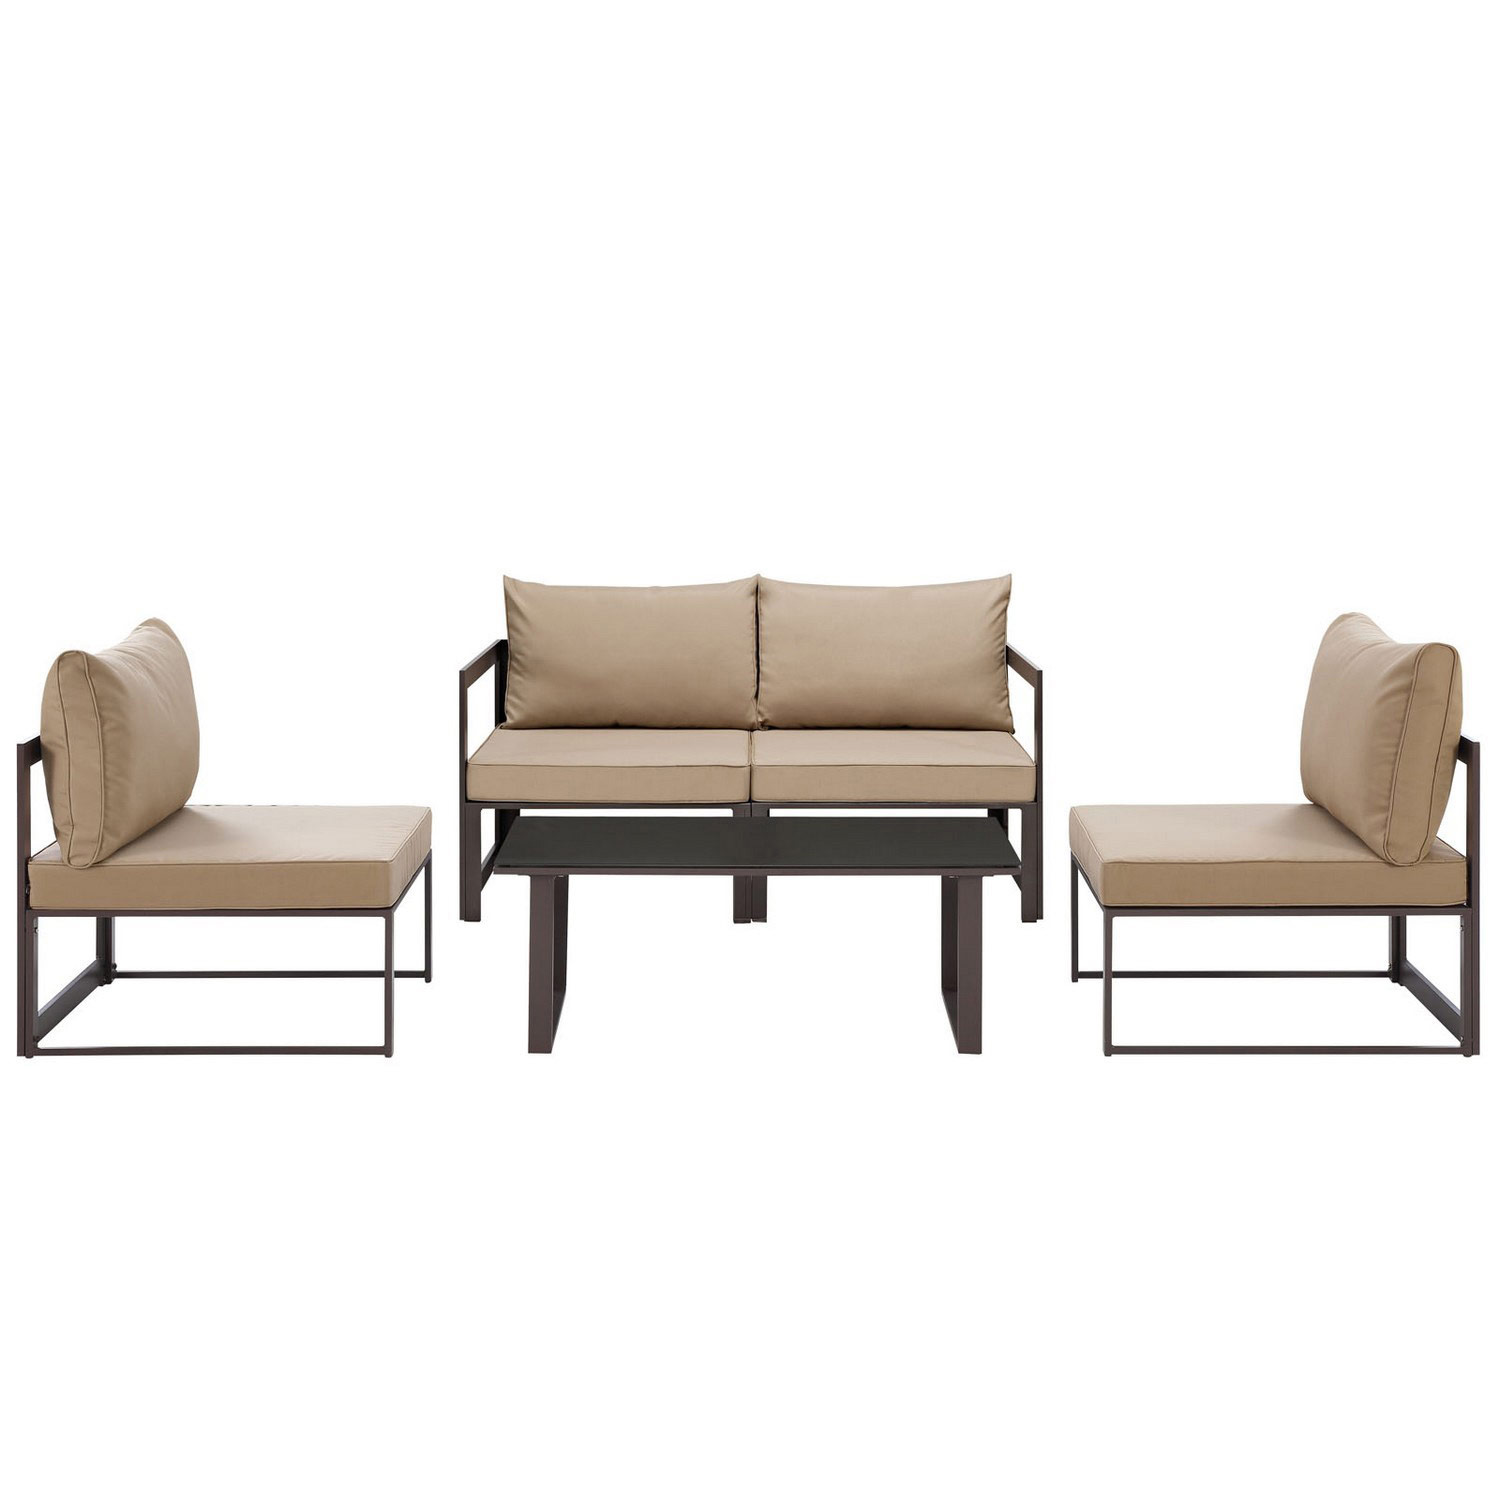 Modway Fortuna 5 Piece Outdoor Patio Sectional Sofa Set - Brown/Mocha